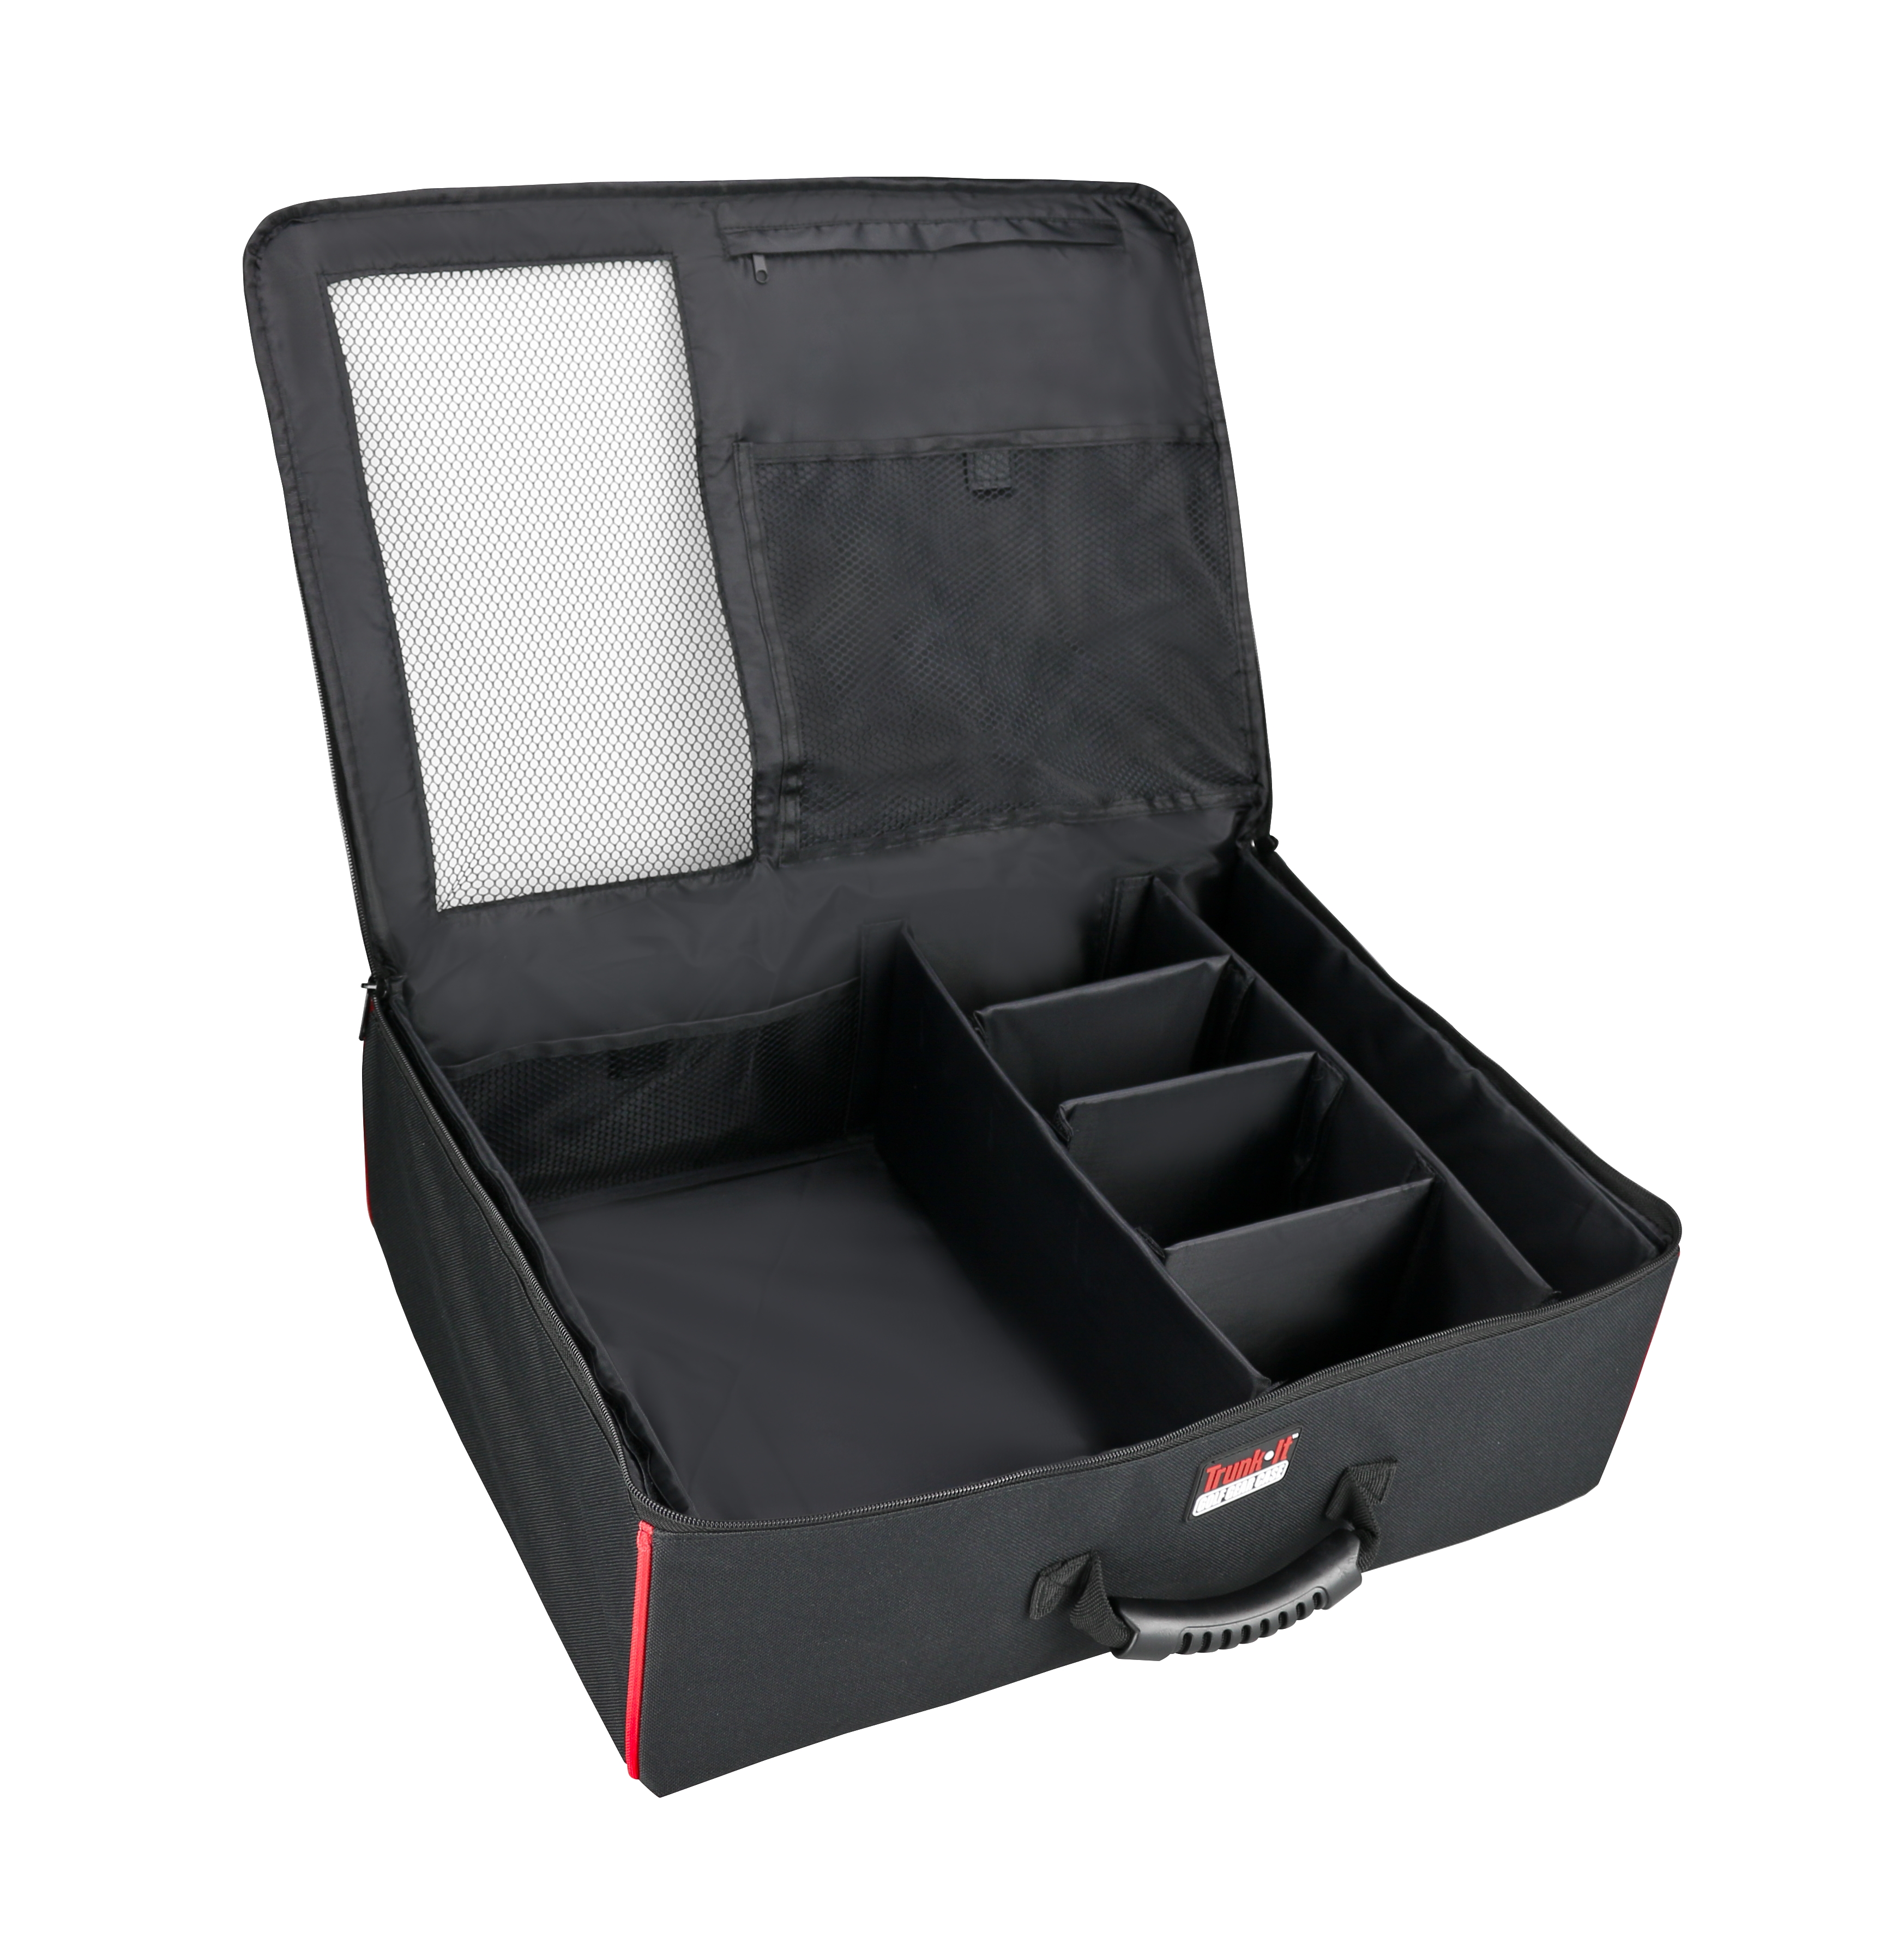 Trunk-It Golf Gear Storage Trunk Organizer/Locker for Car or Truck - image 1 of 4